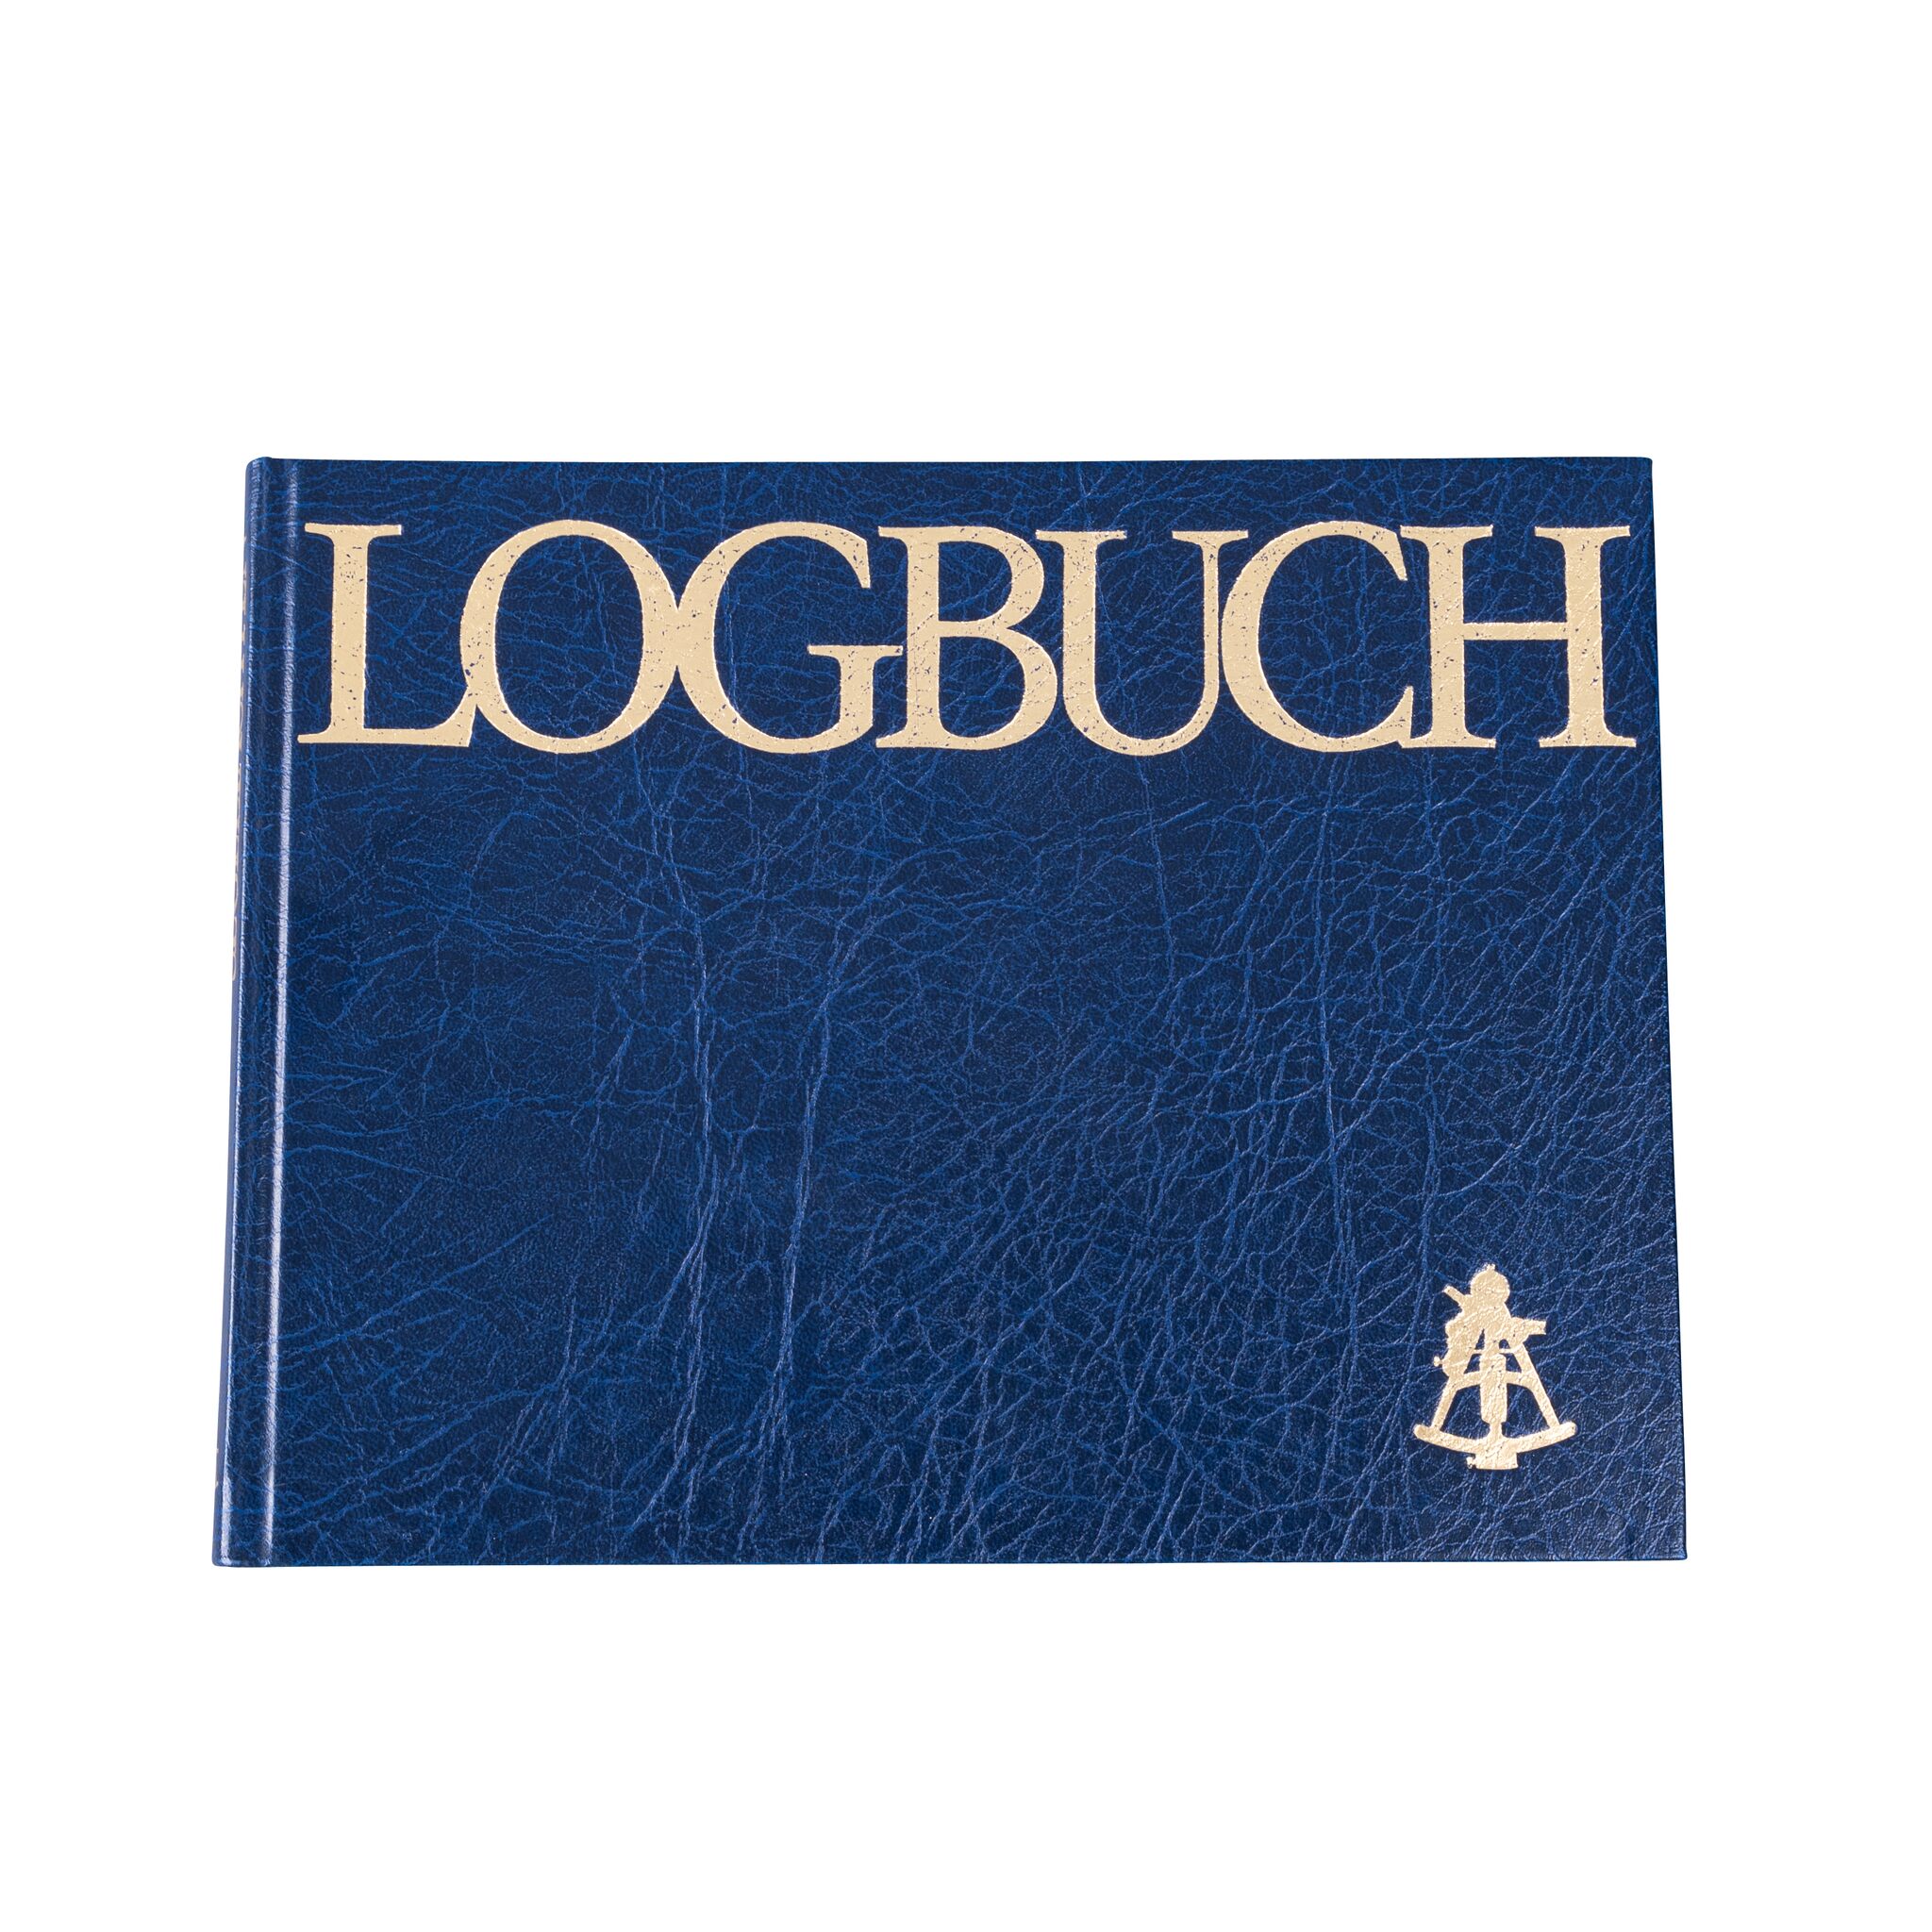 FORMULARUS VERLAG Logbuch im Querformat, blau